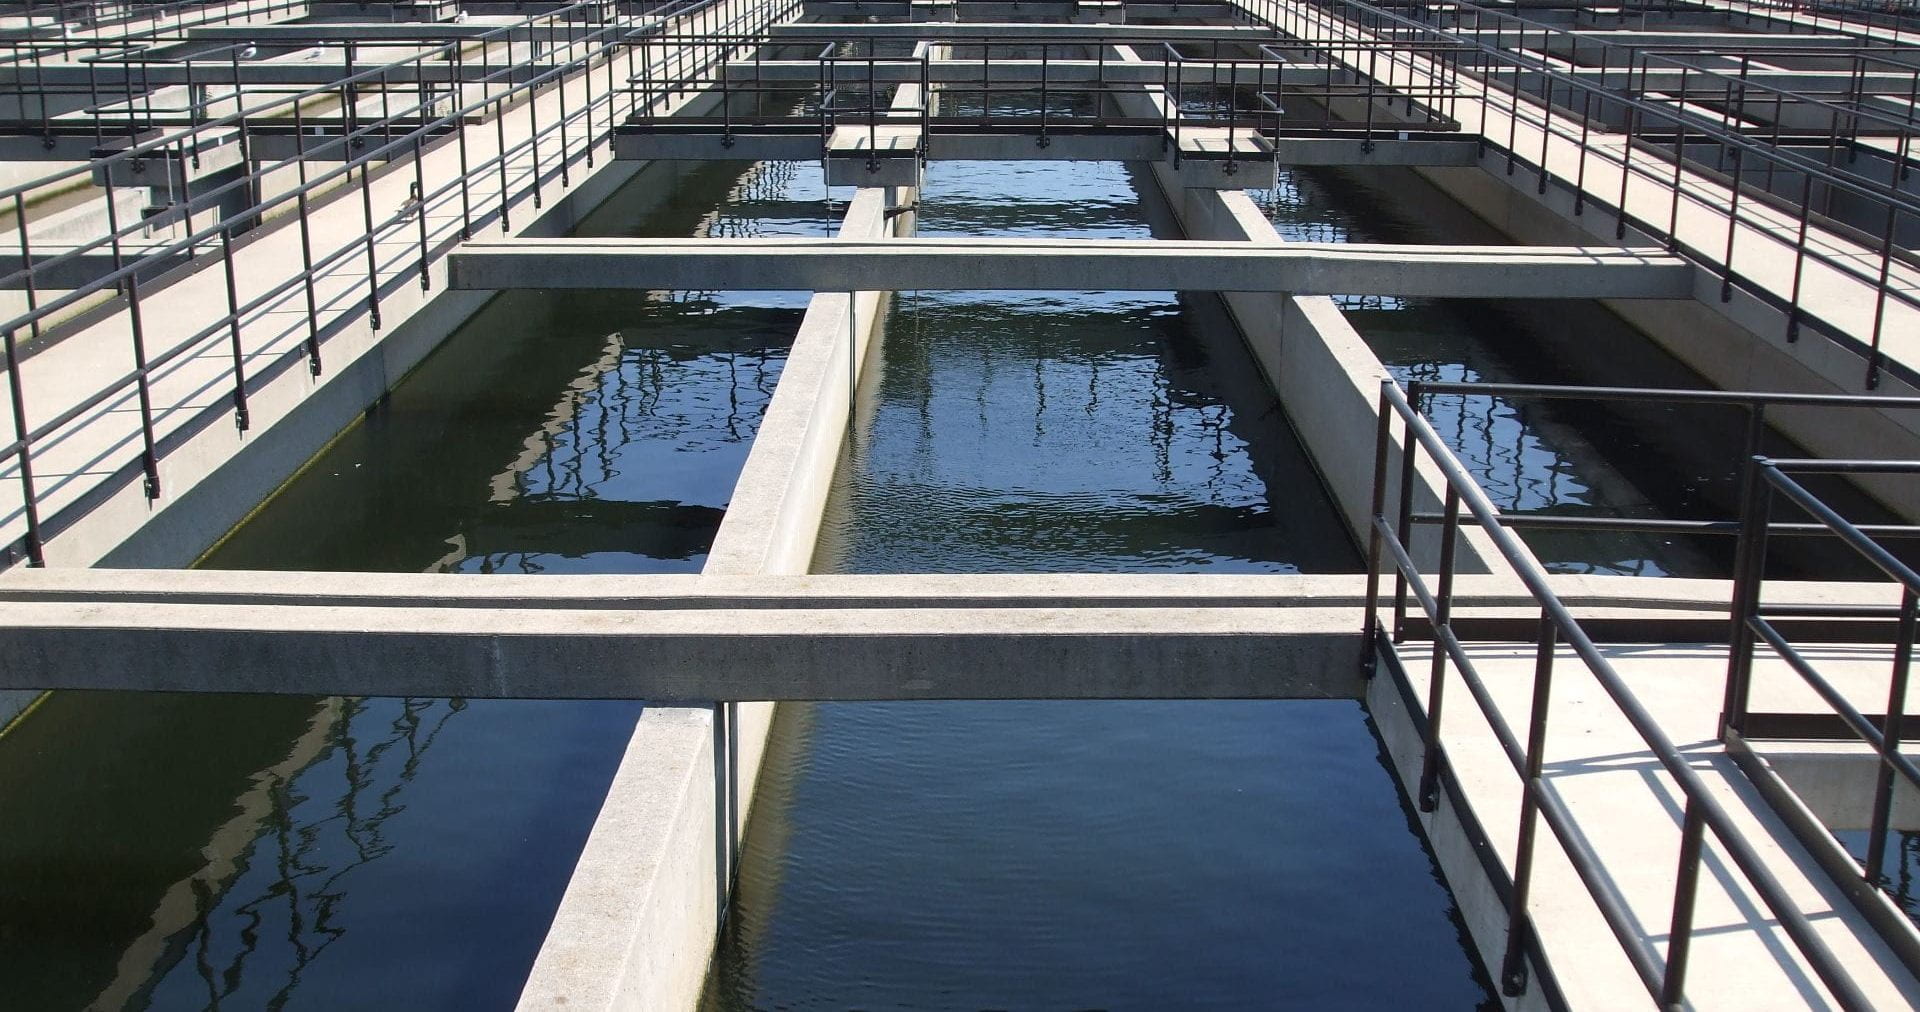 Wastewater treatment facility, Milwaukee